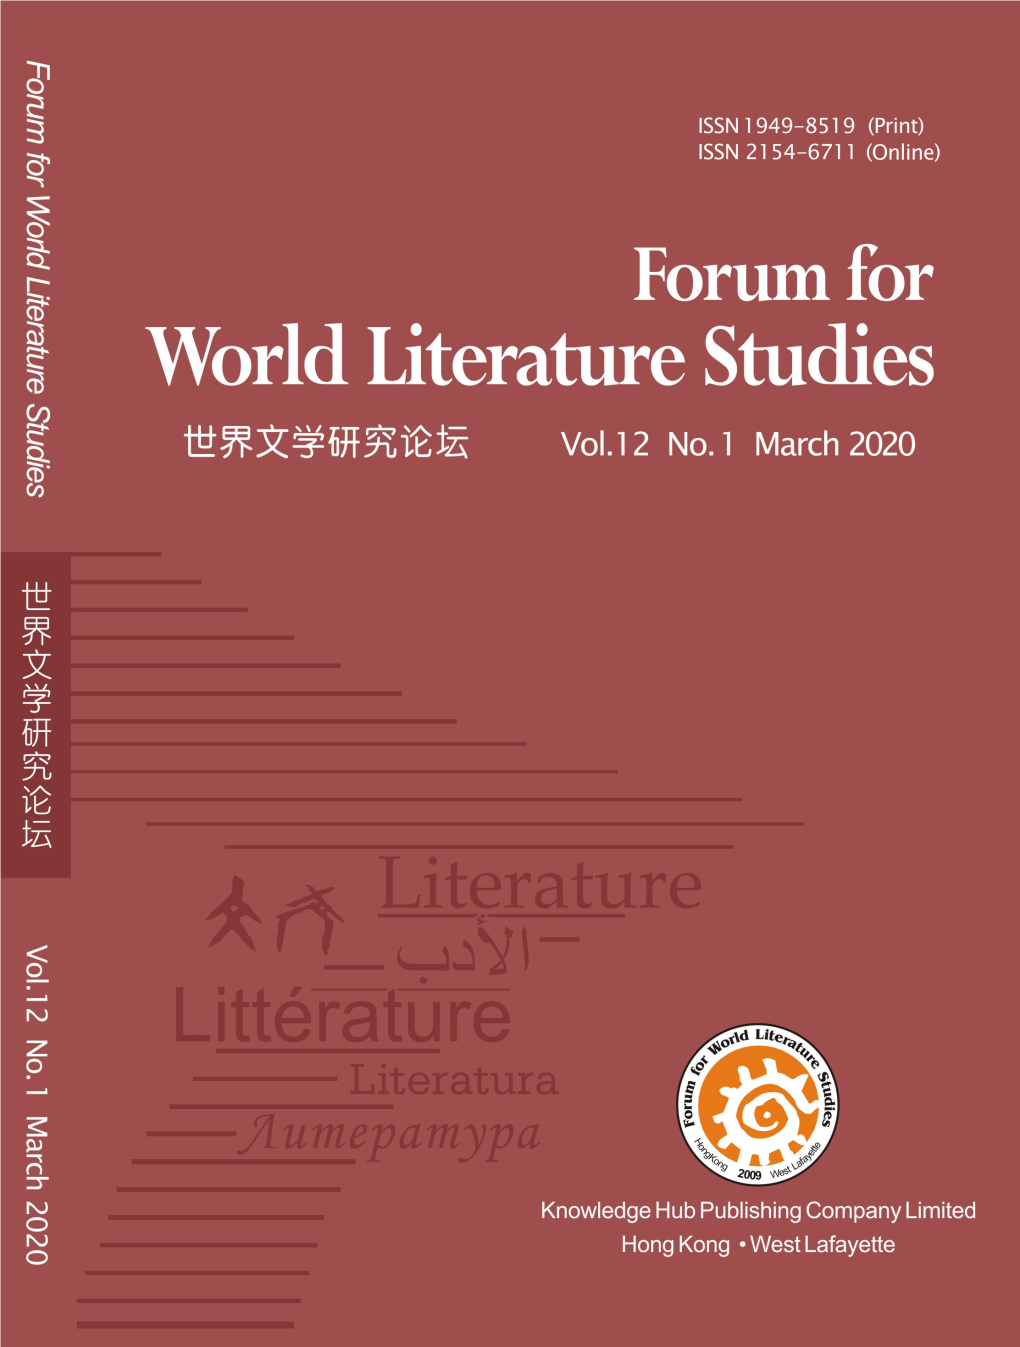 Forum for World Literature Studies Vol.12, No.1, March 2020